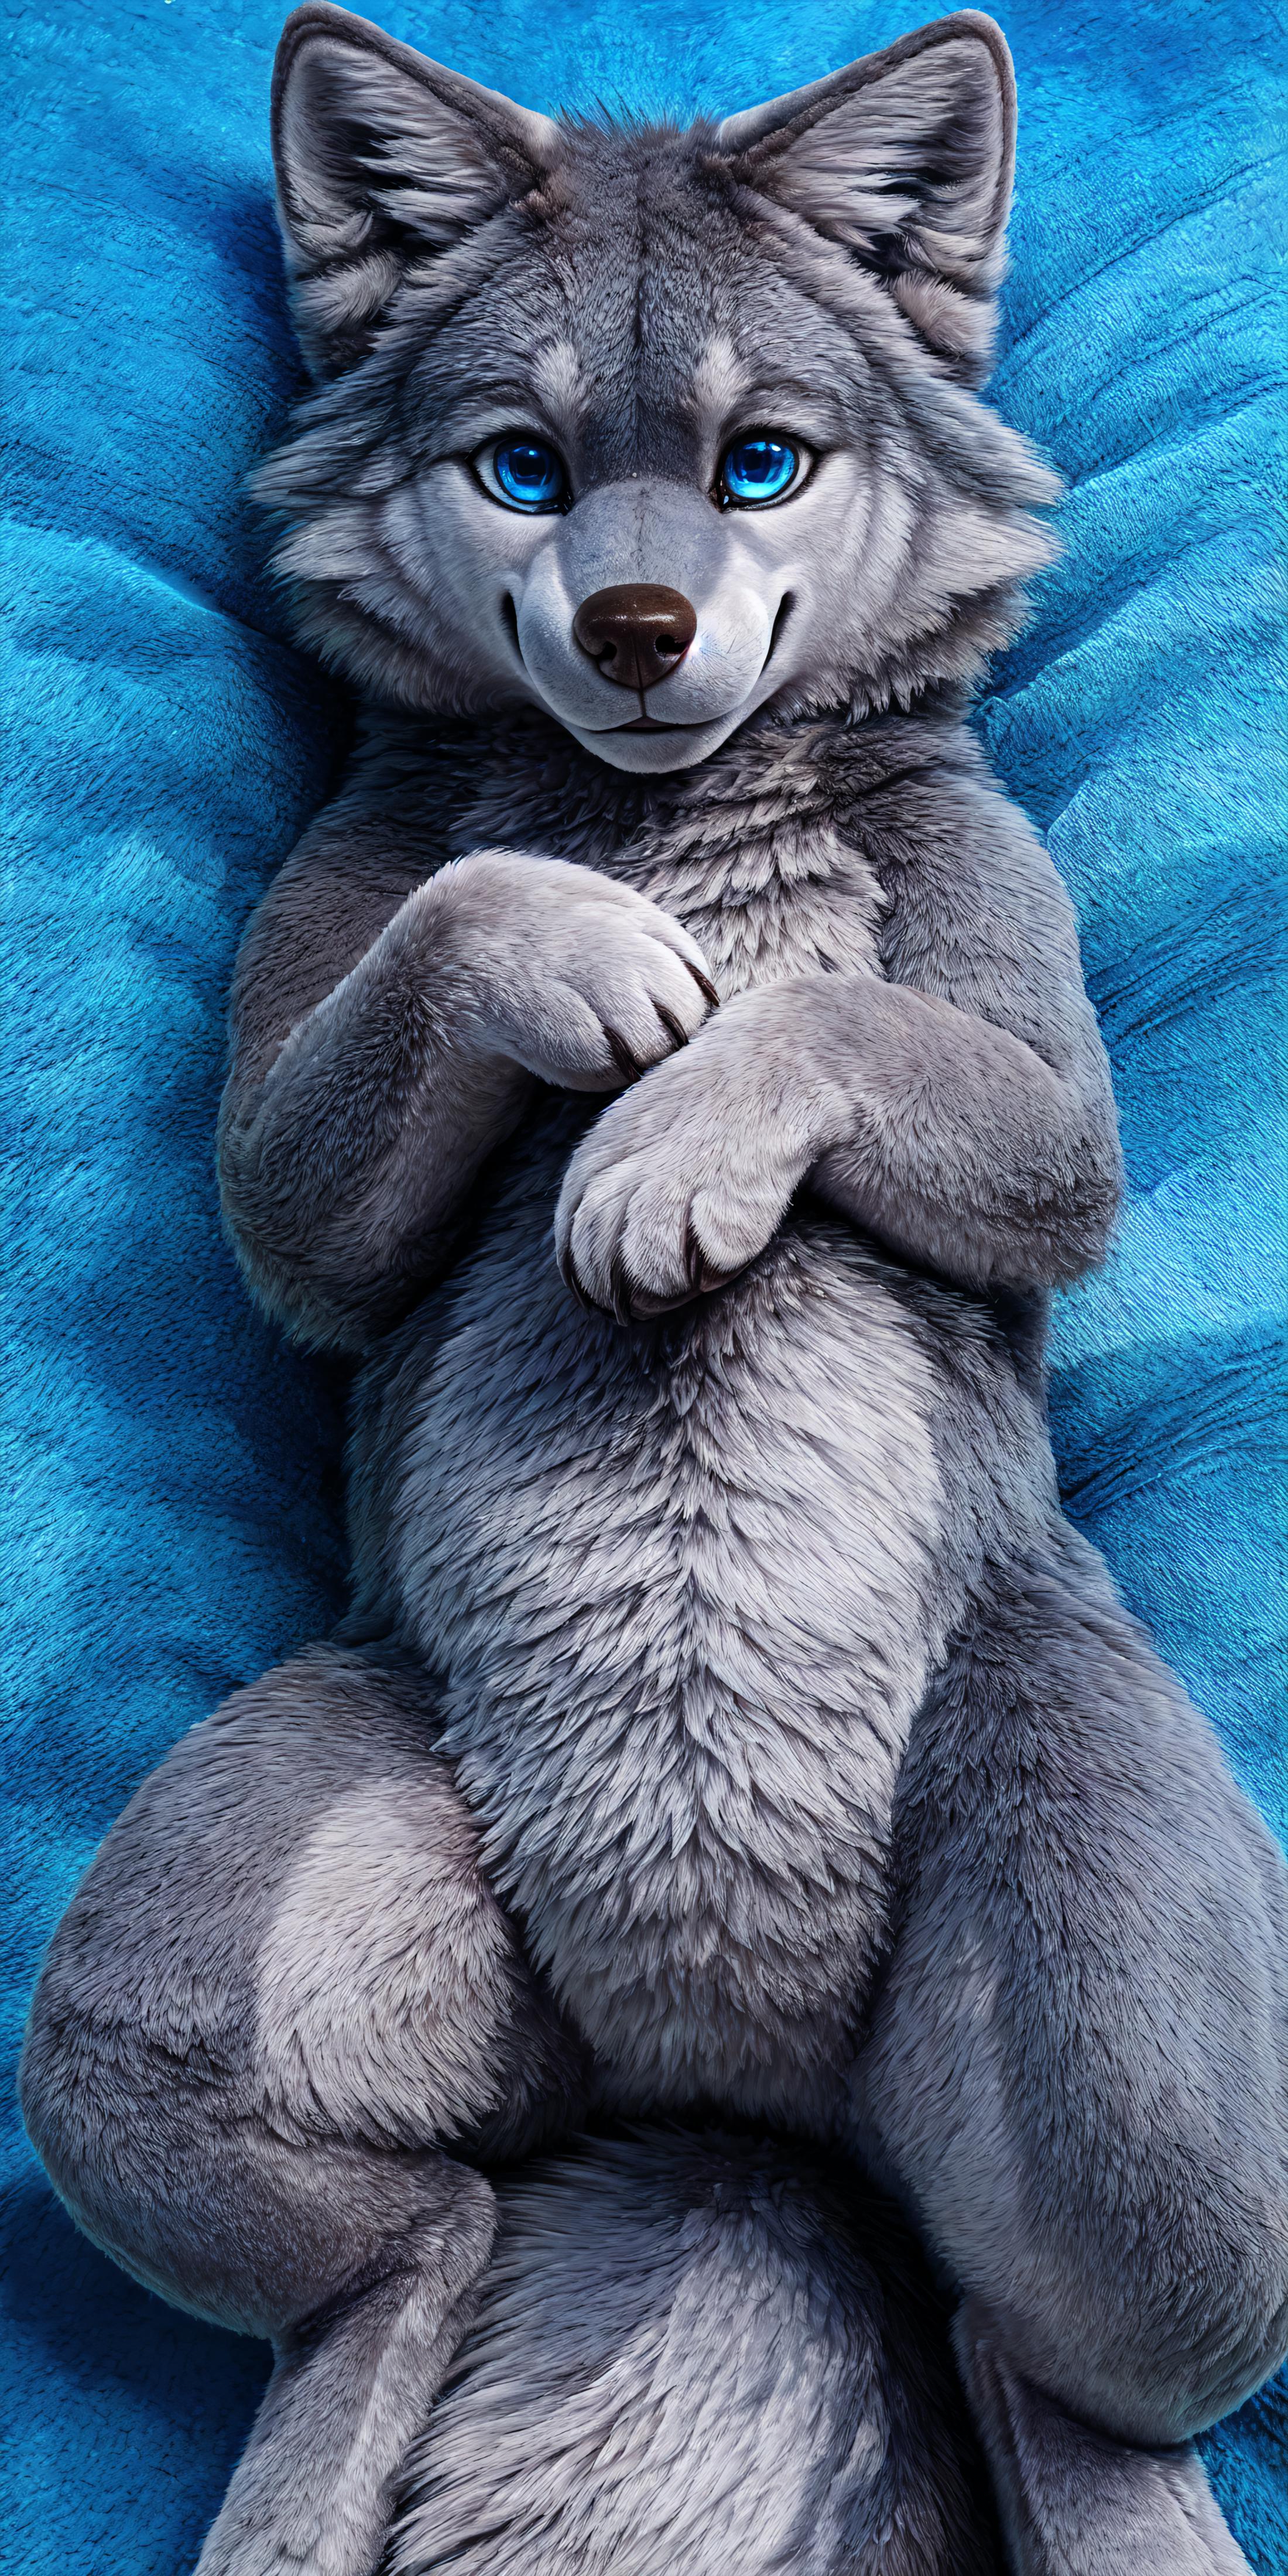 A Gray Stuffed Animal Bear Laying on Blue Bedding.